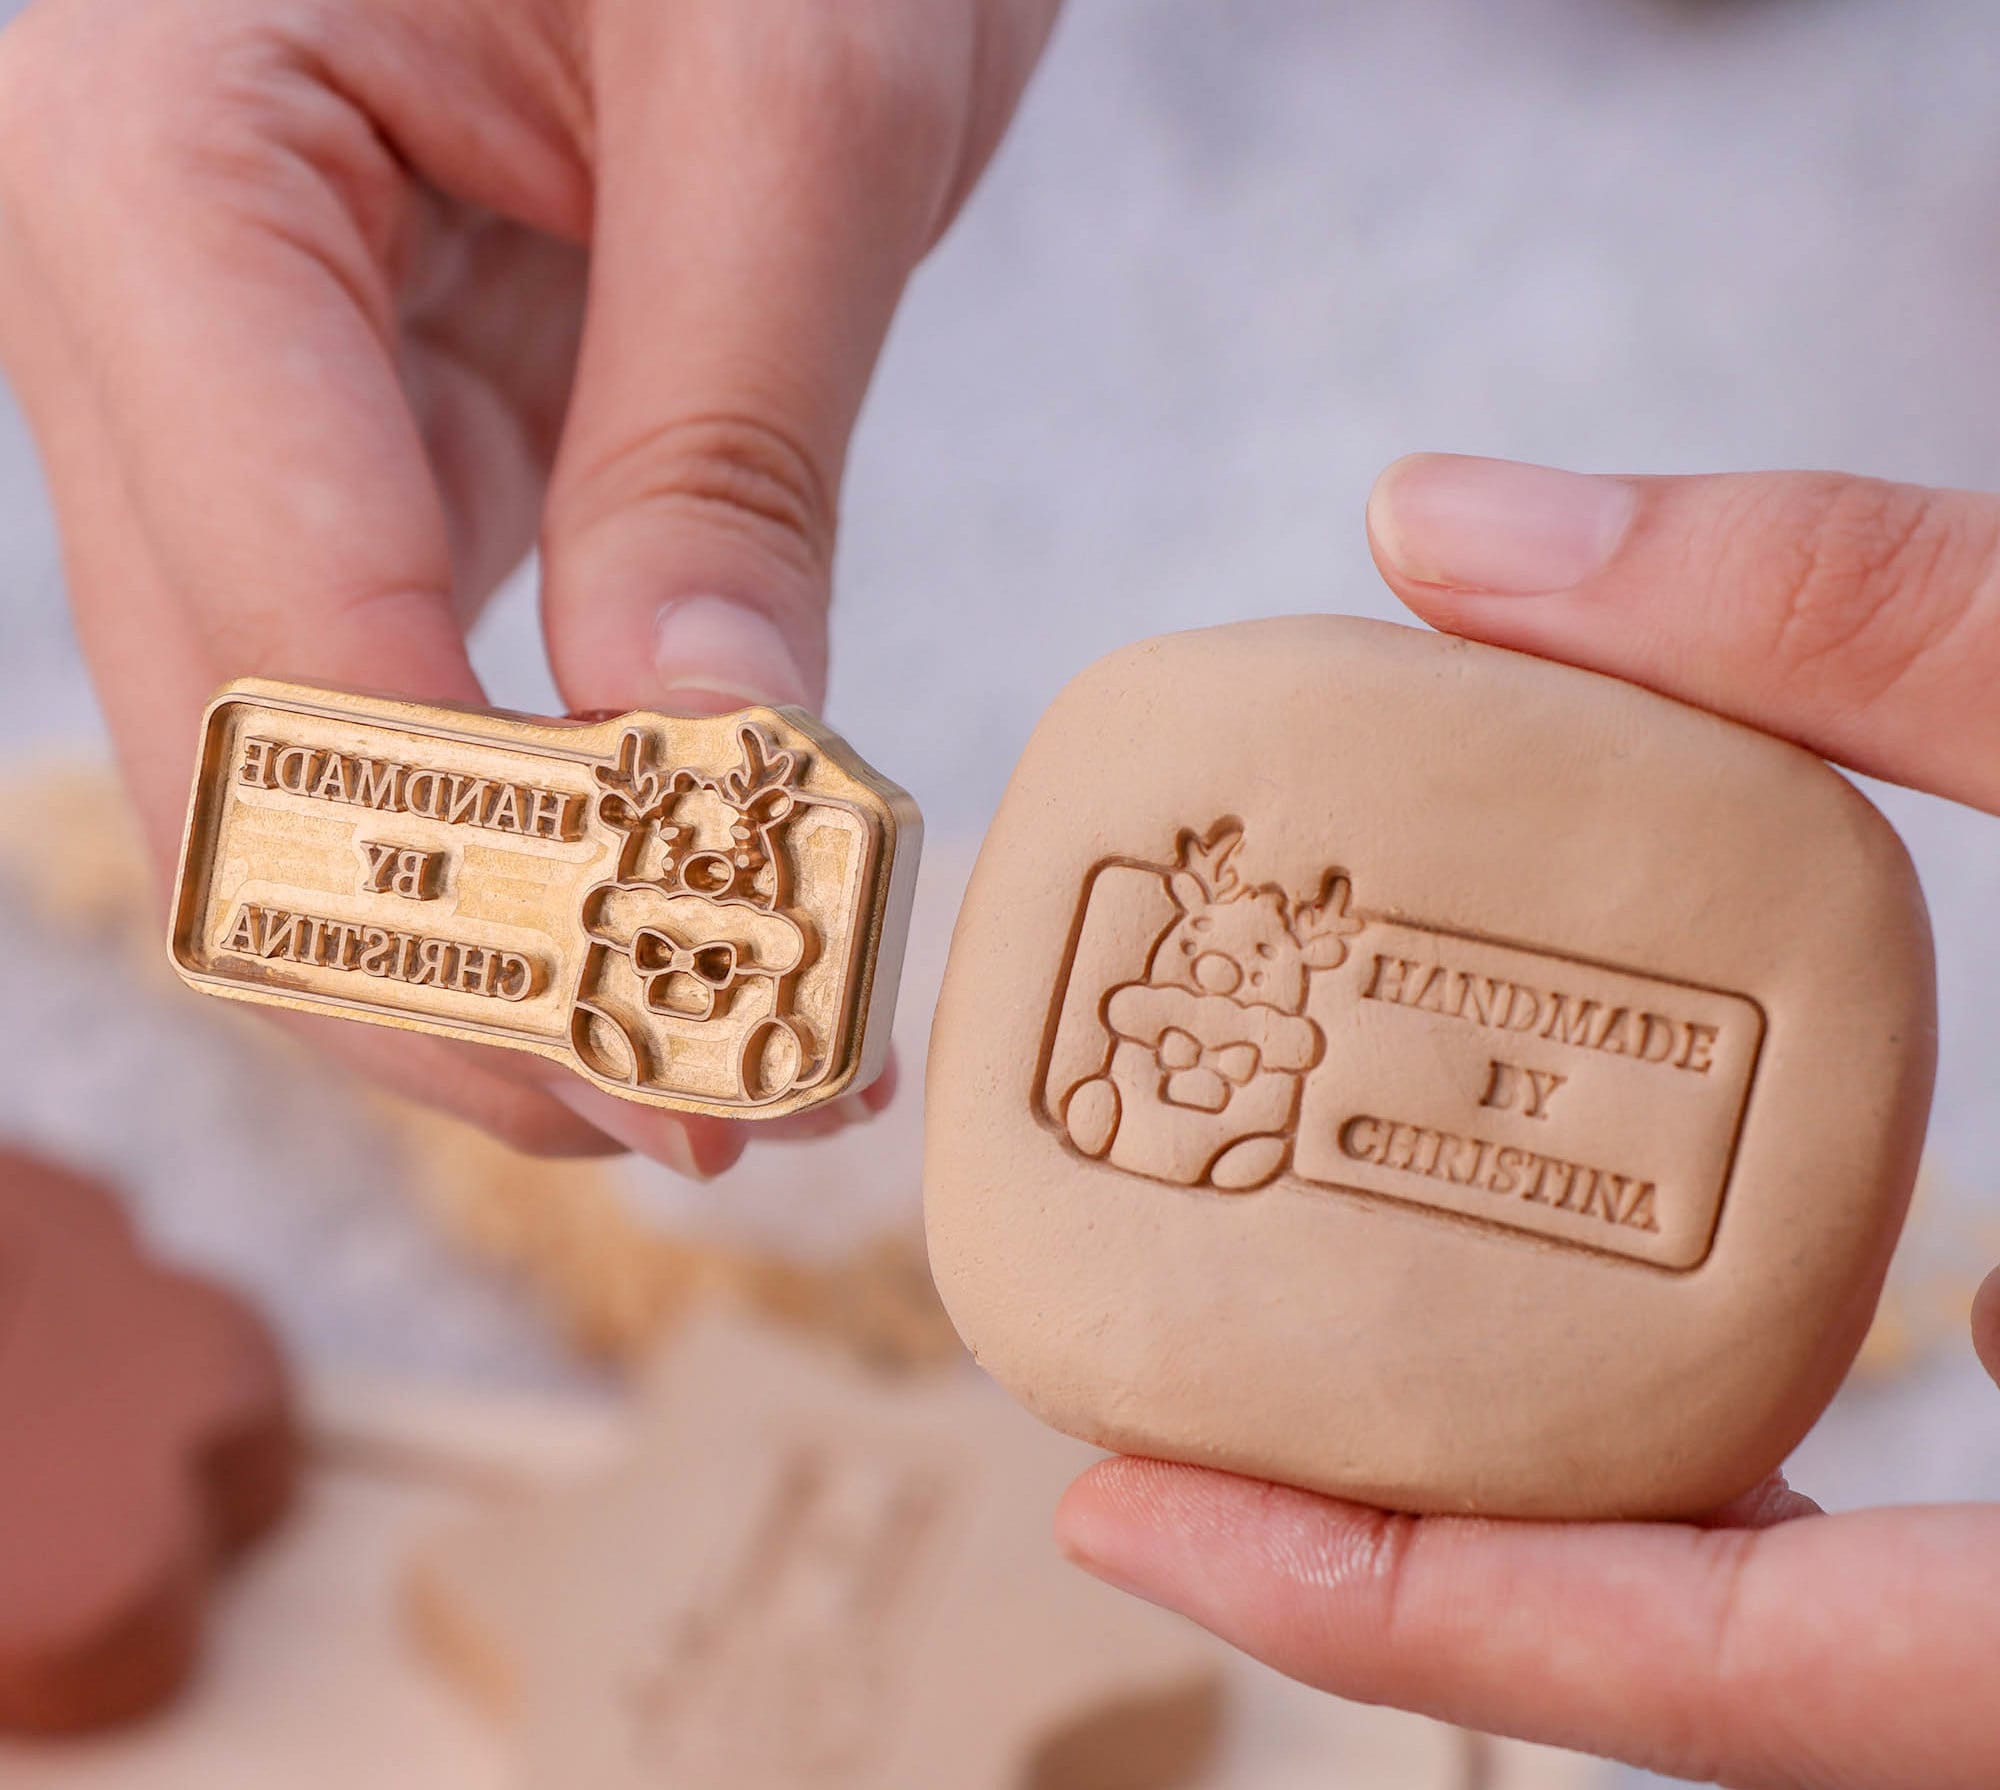 Custom Brass/acrylic Pottery Stamp Ceramic for 